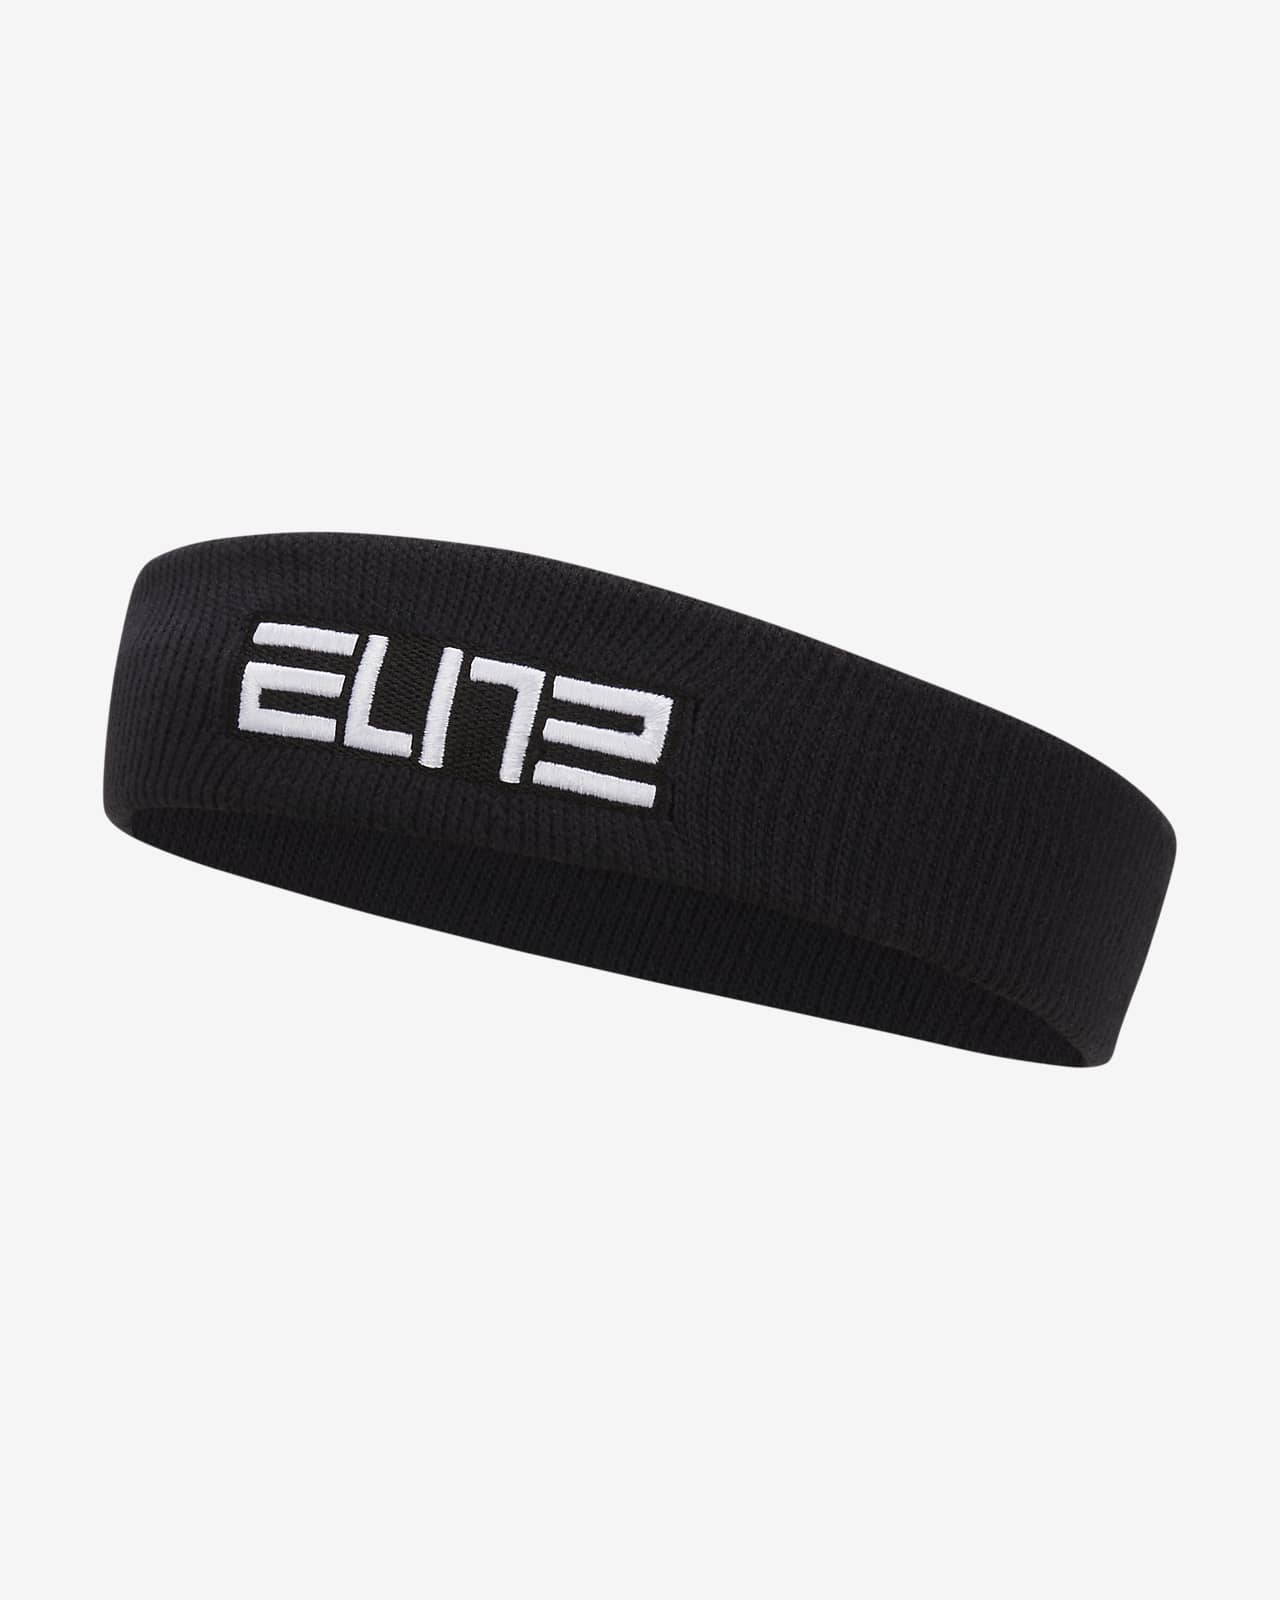 Nike Elite Stirnband